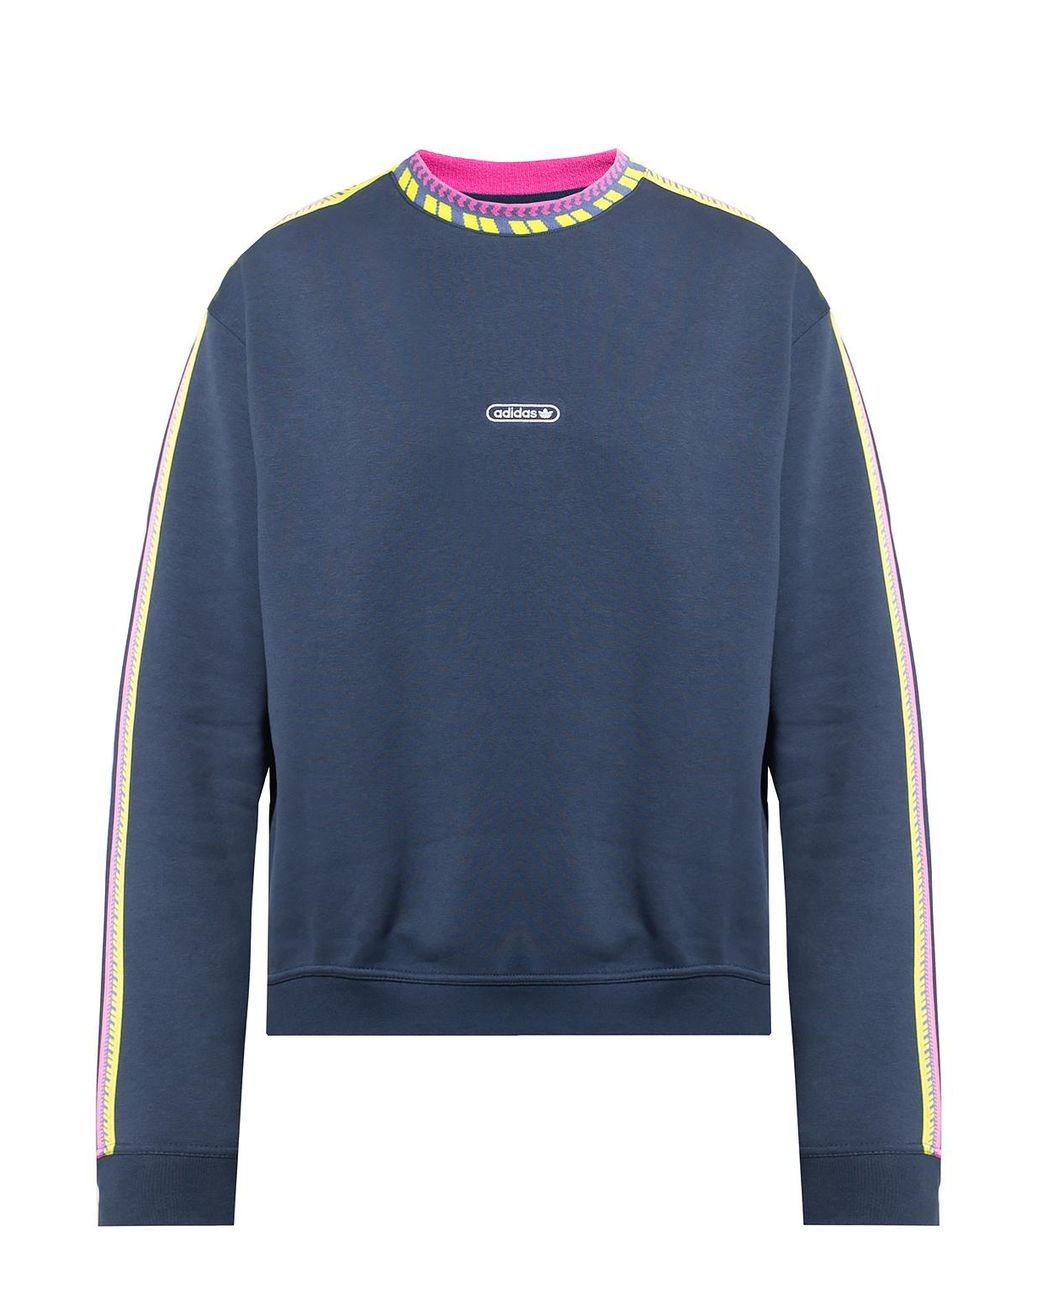 adidas Originals Cotton Sweatshirt With Logo in Navy Blue (Blue) for